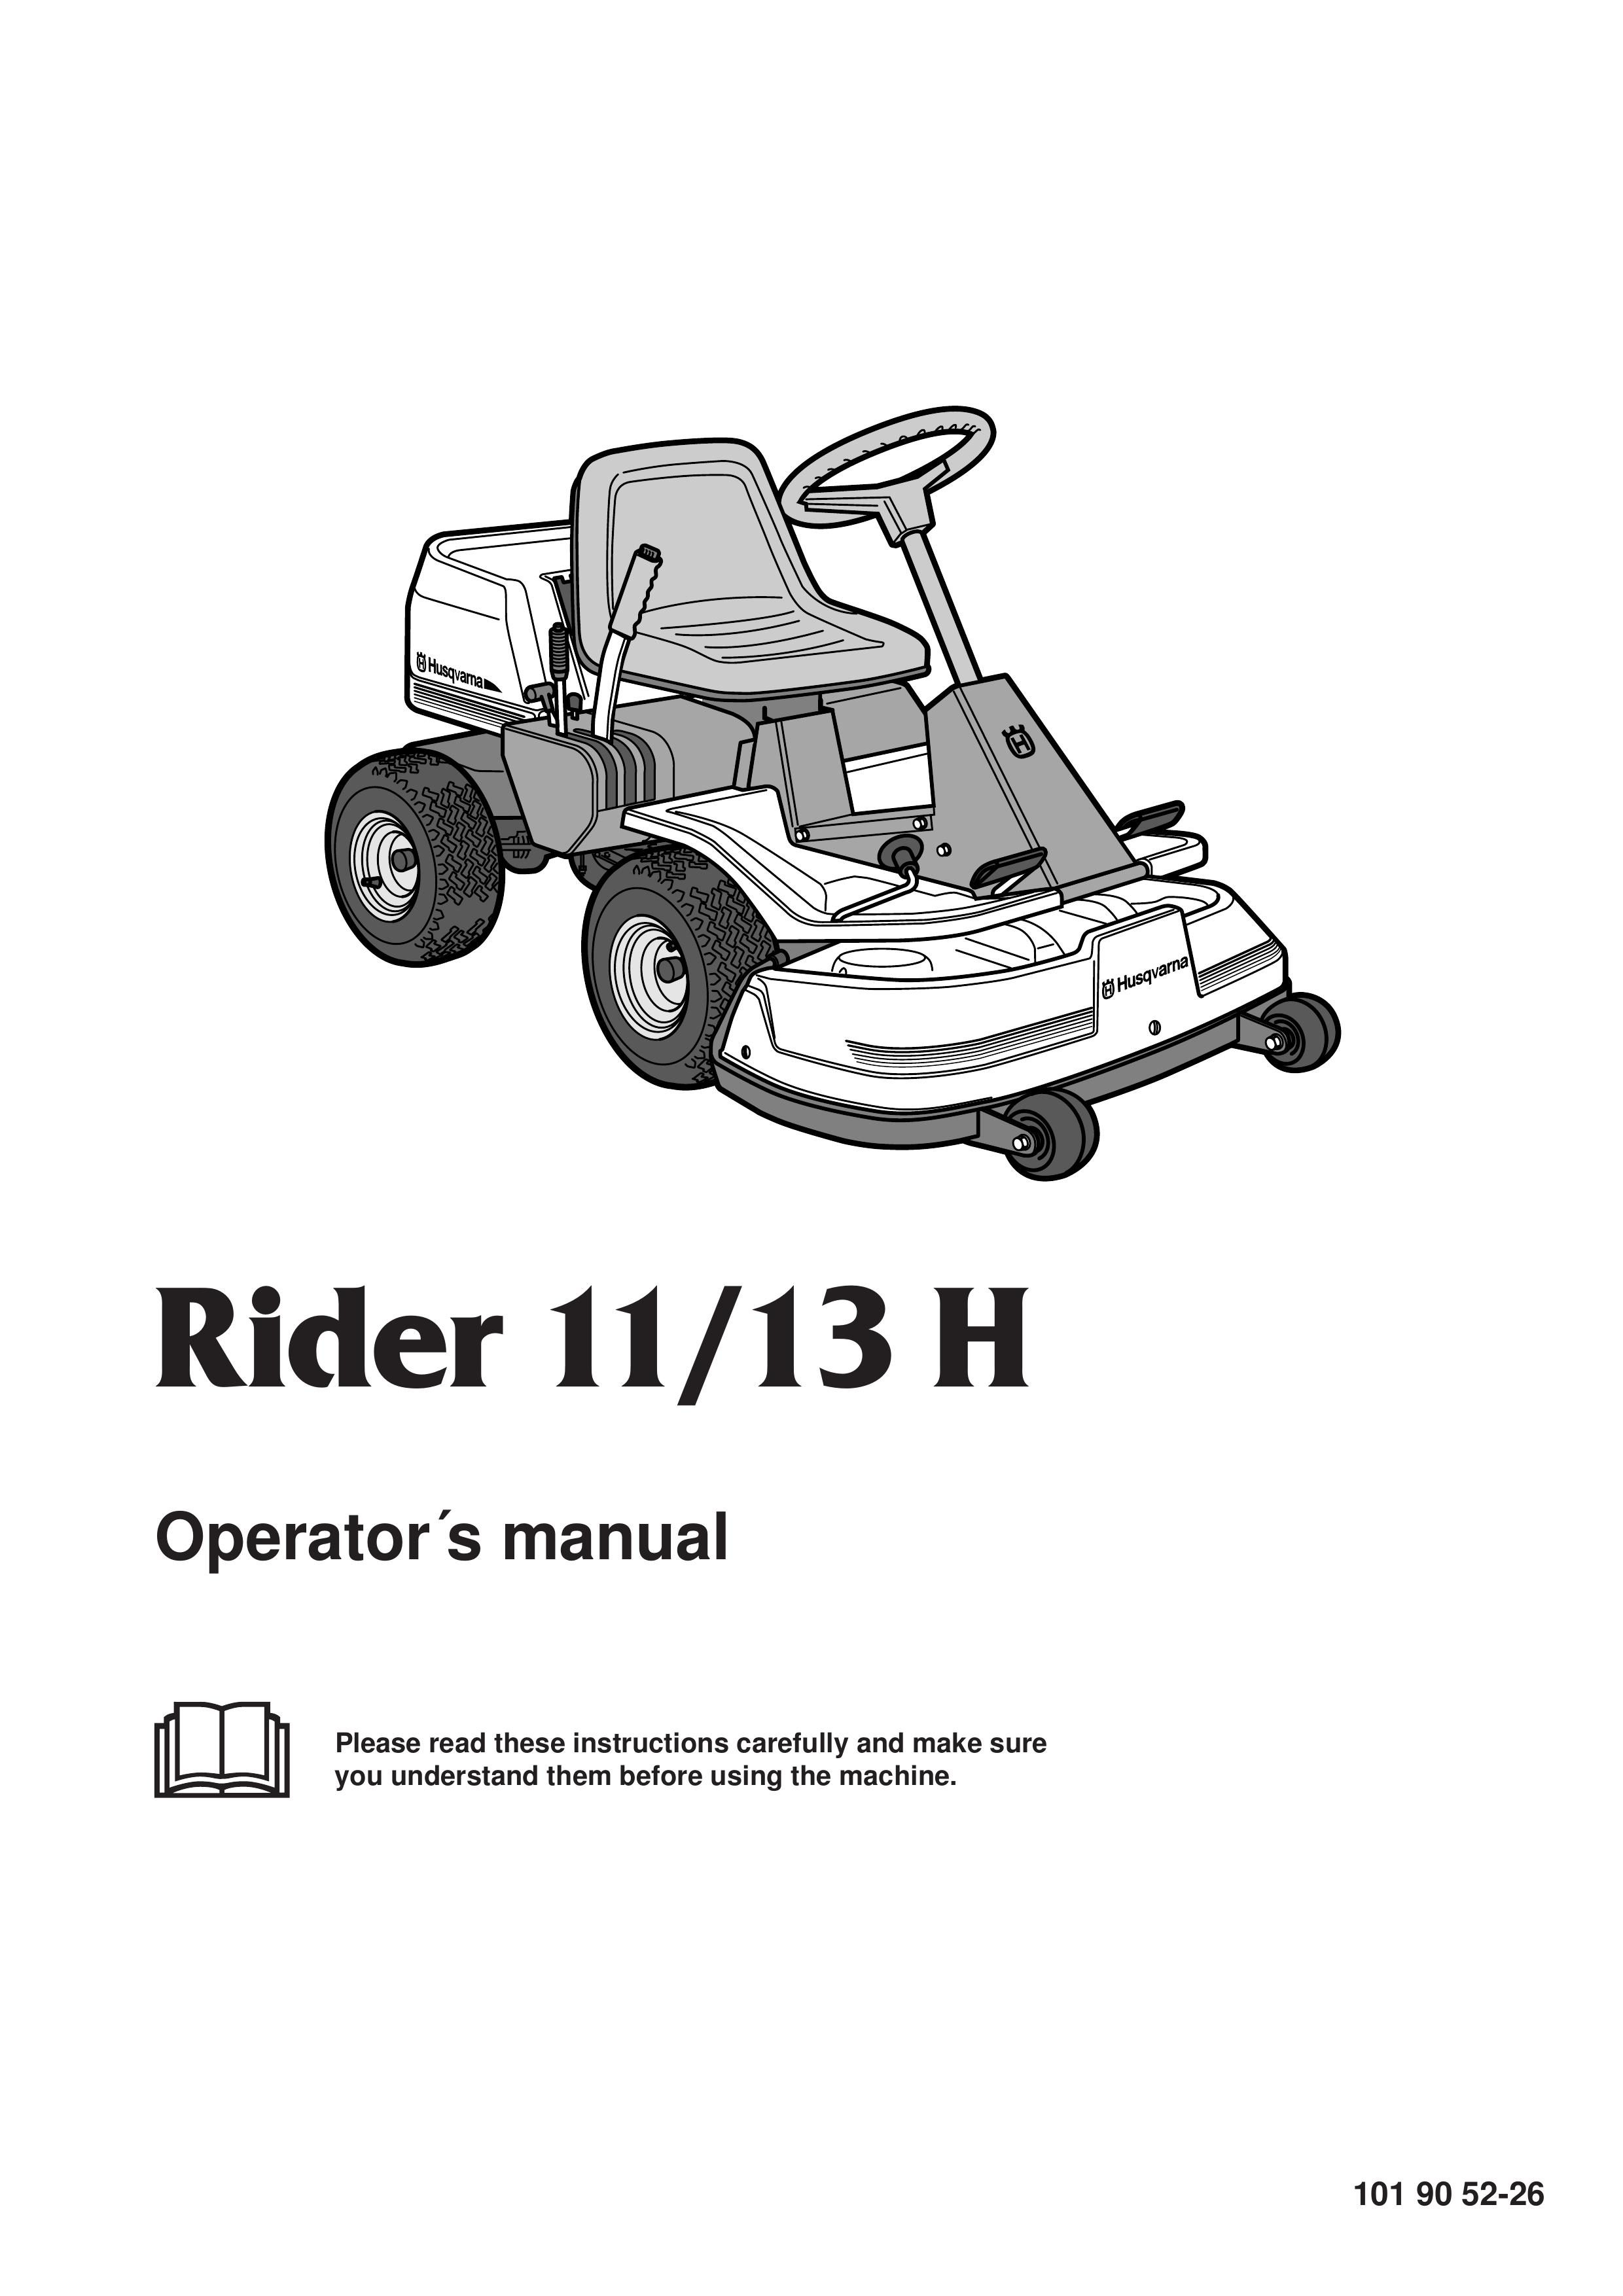 Husqvarna 13 H Lawn Mower User Manual